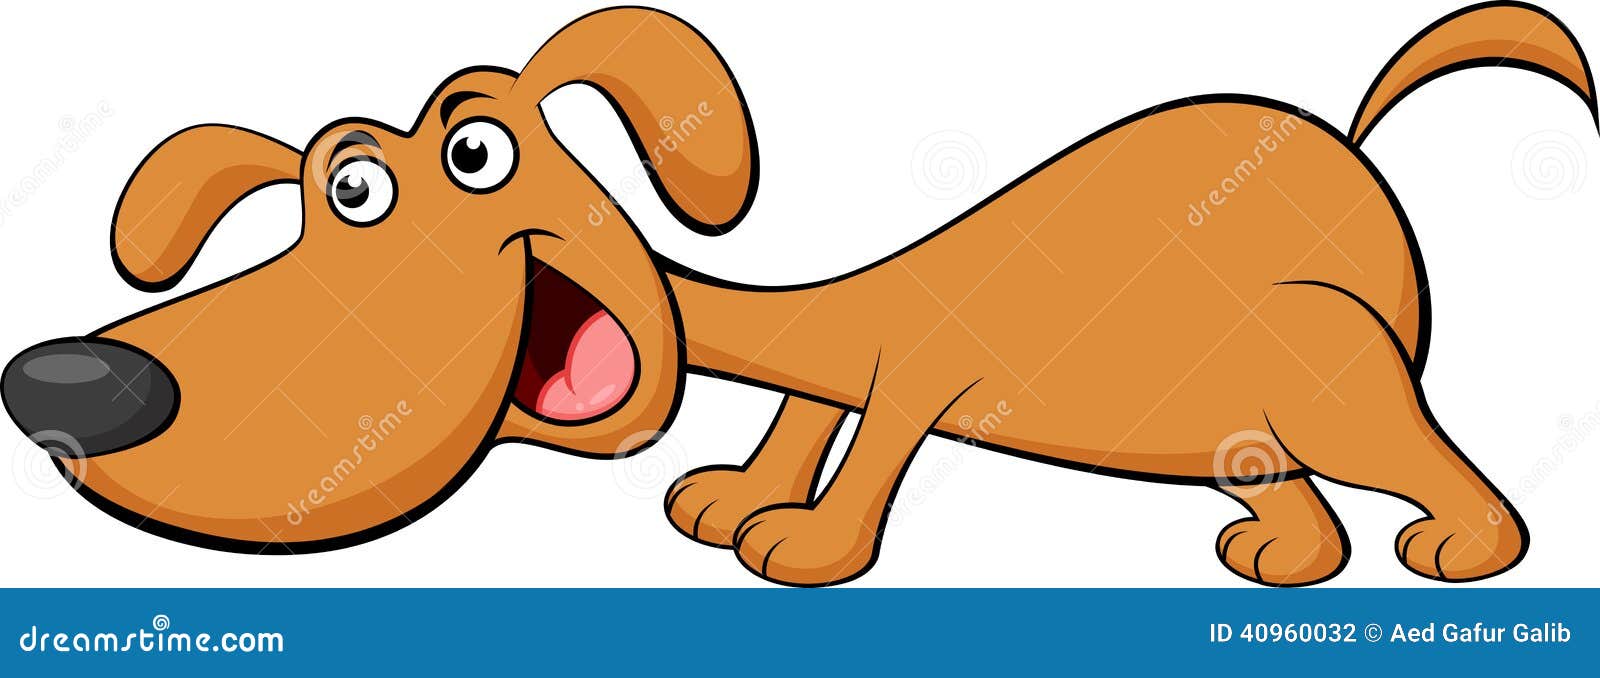 Funny dog cartoon stock vector. Illustration of character - 40960032